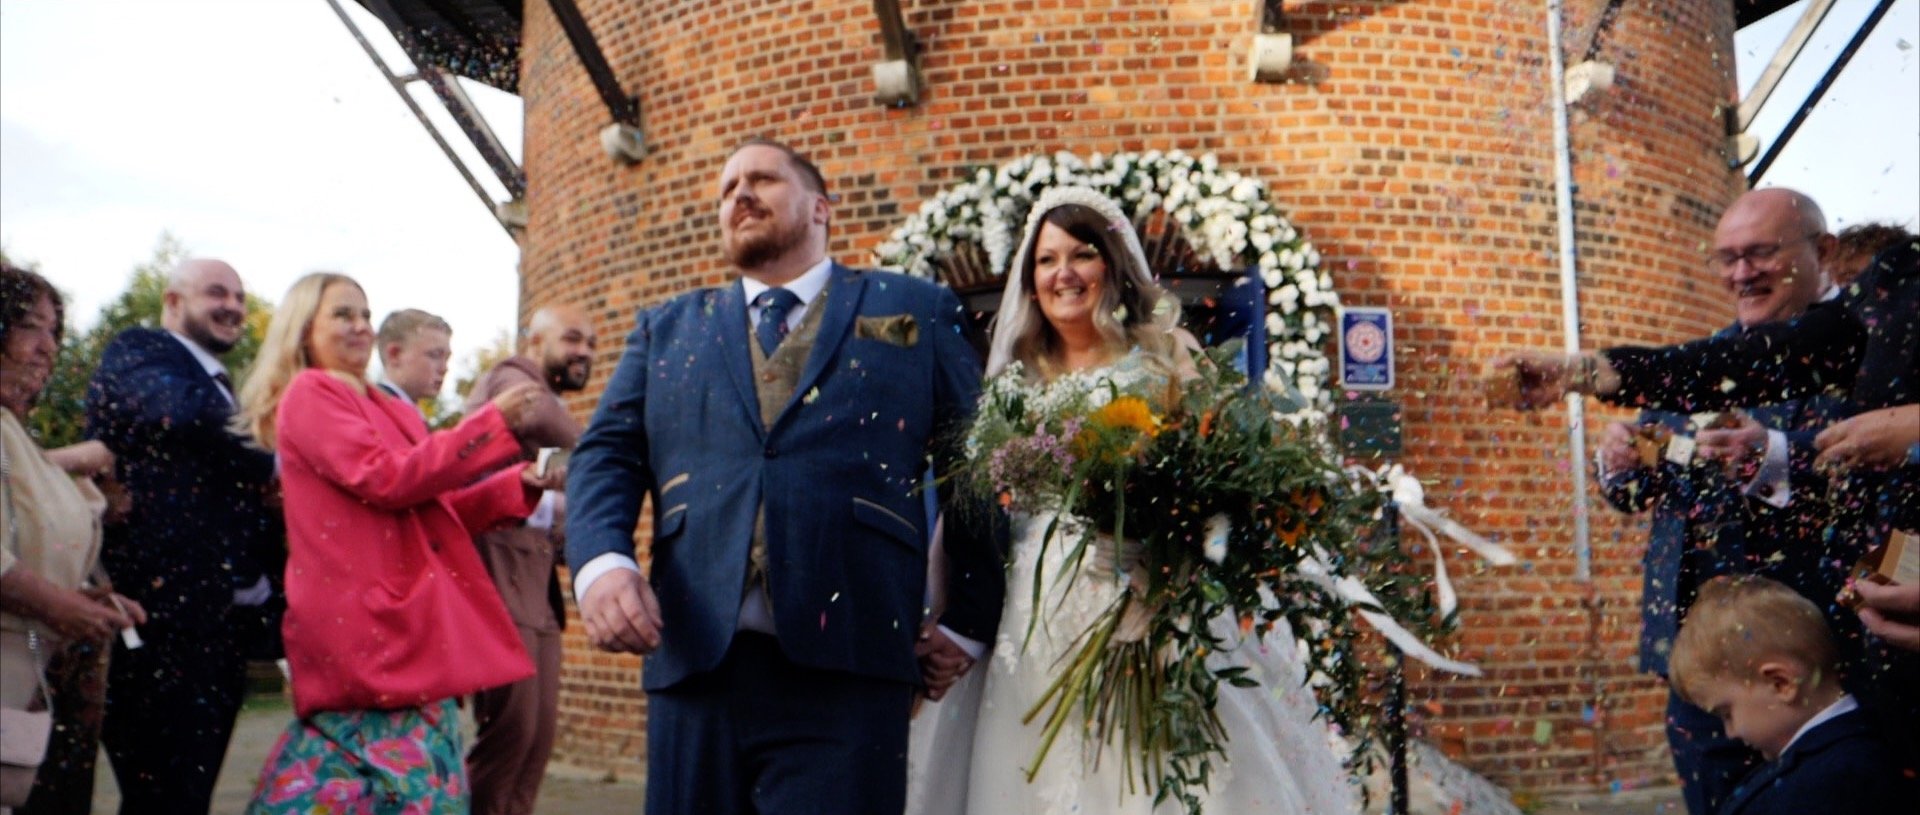 Confetti at Rayleigh windmill Essex wedding videos.jpg